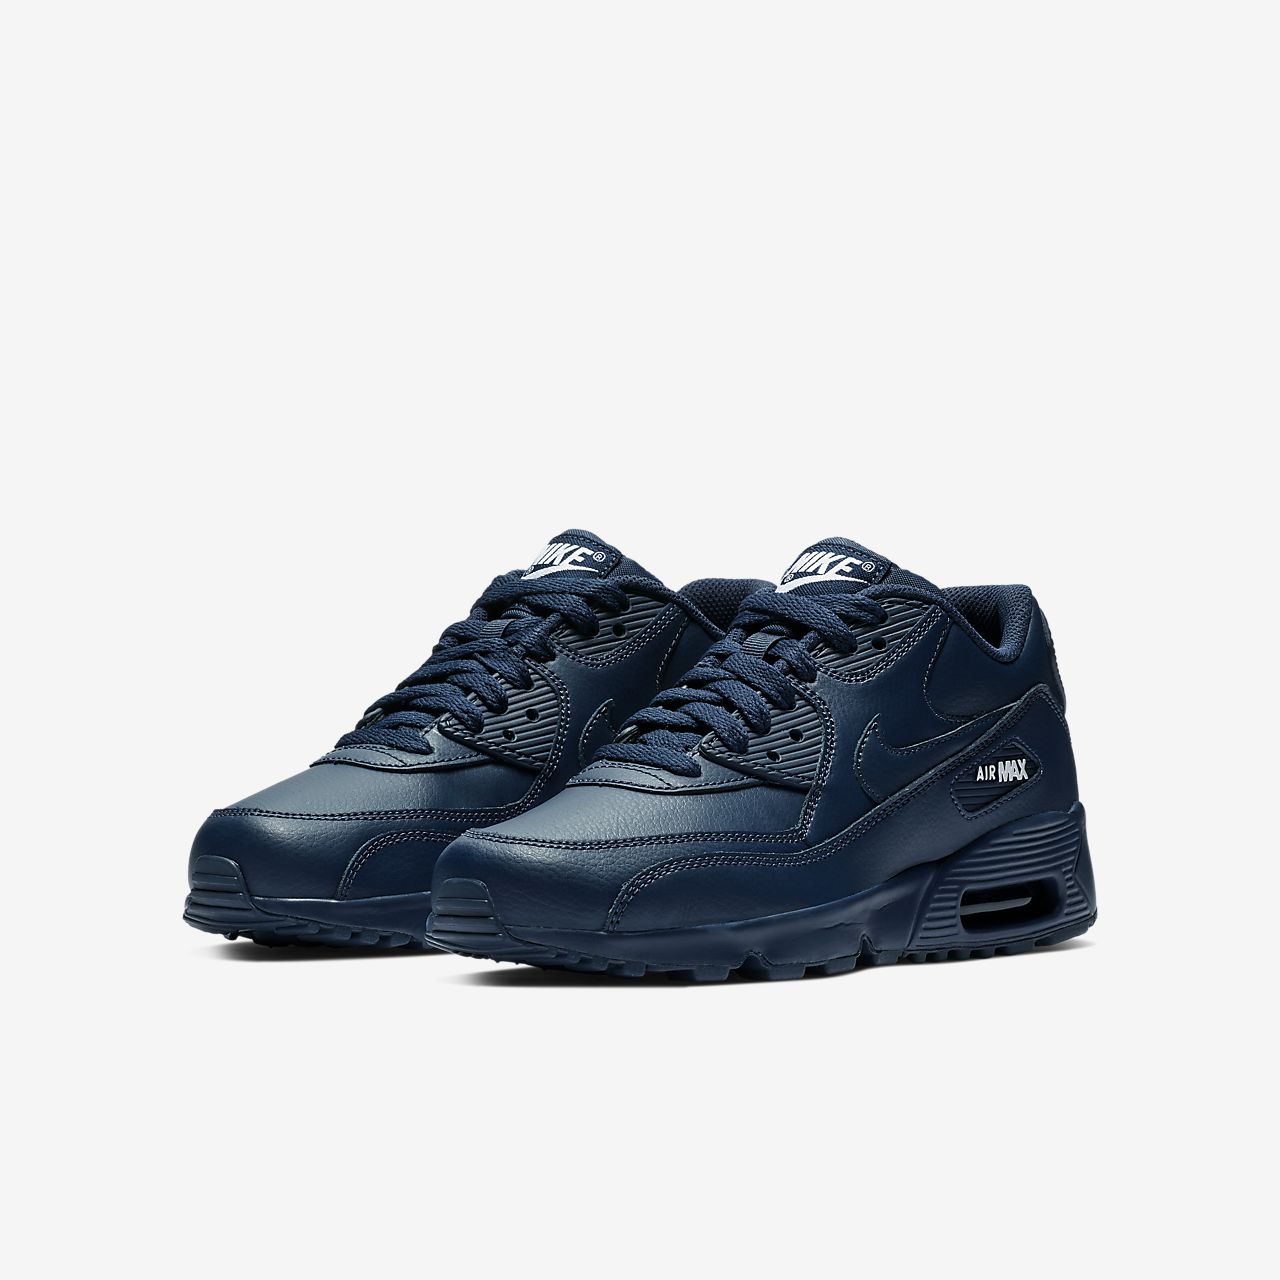 Nike Air Max 90 Leather - Sneakers - Mørkeblå/Hvide | DK-45510